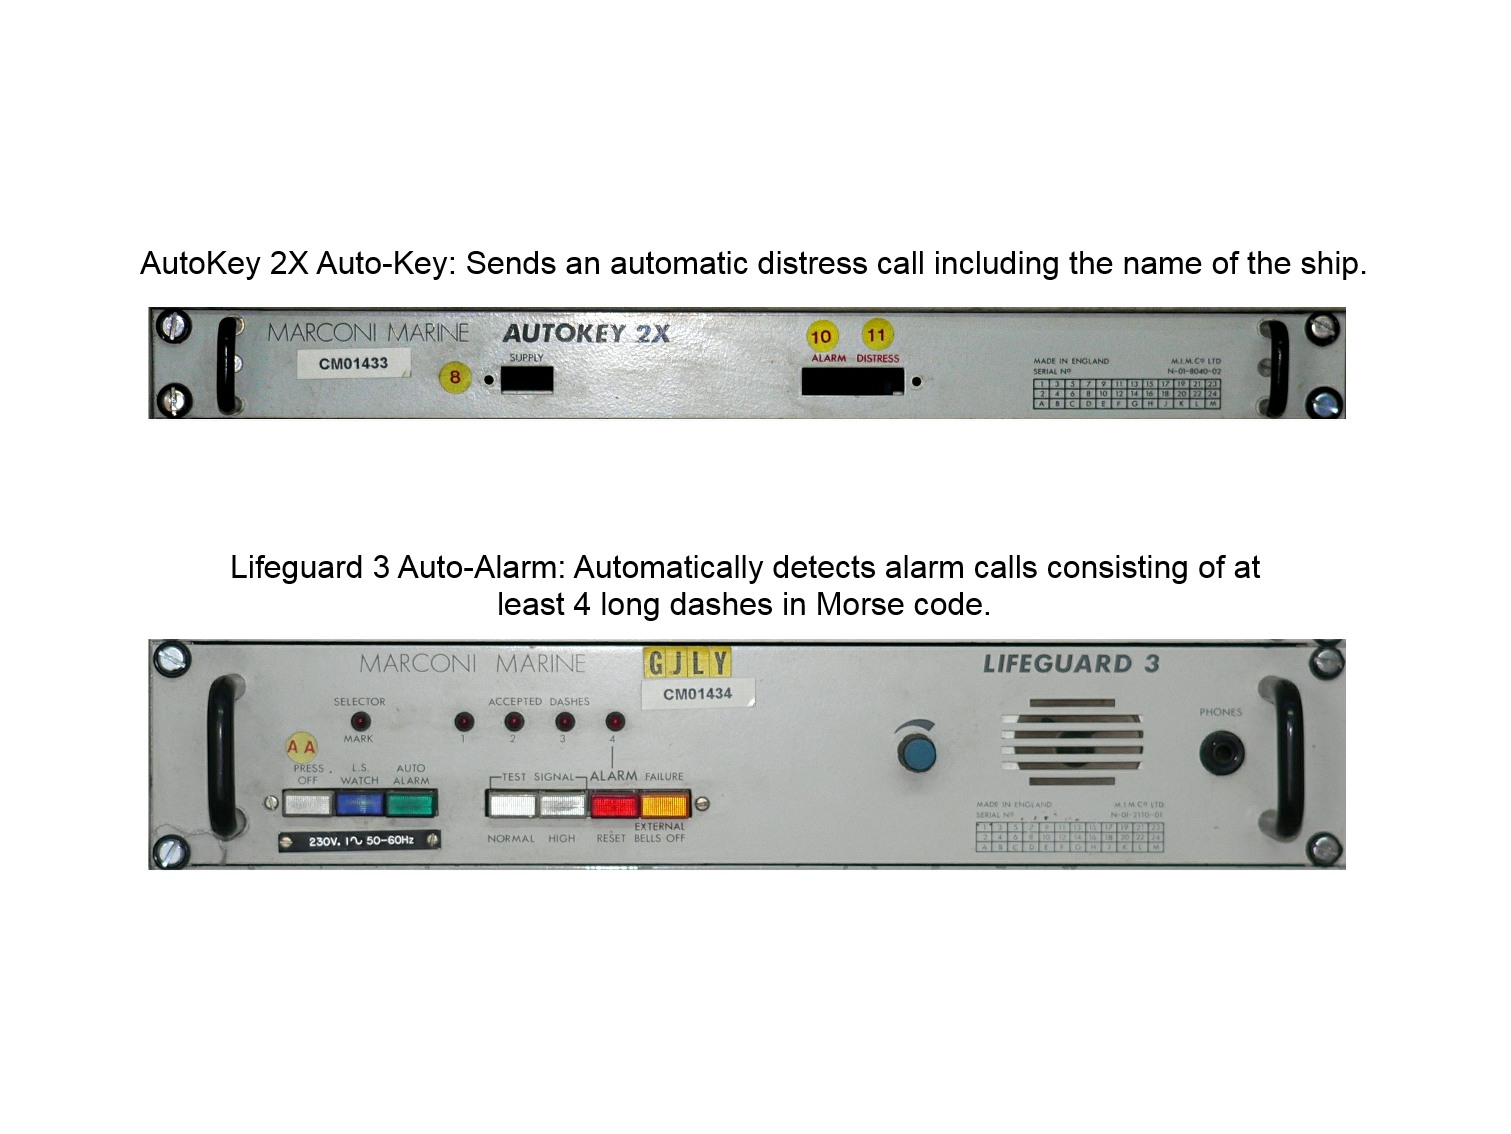 Auto-Key and Auto-Alarm Units